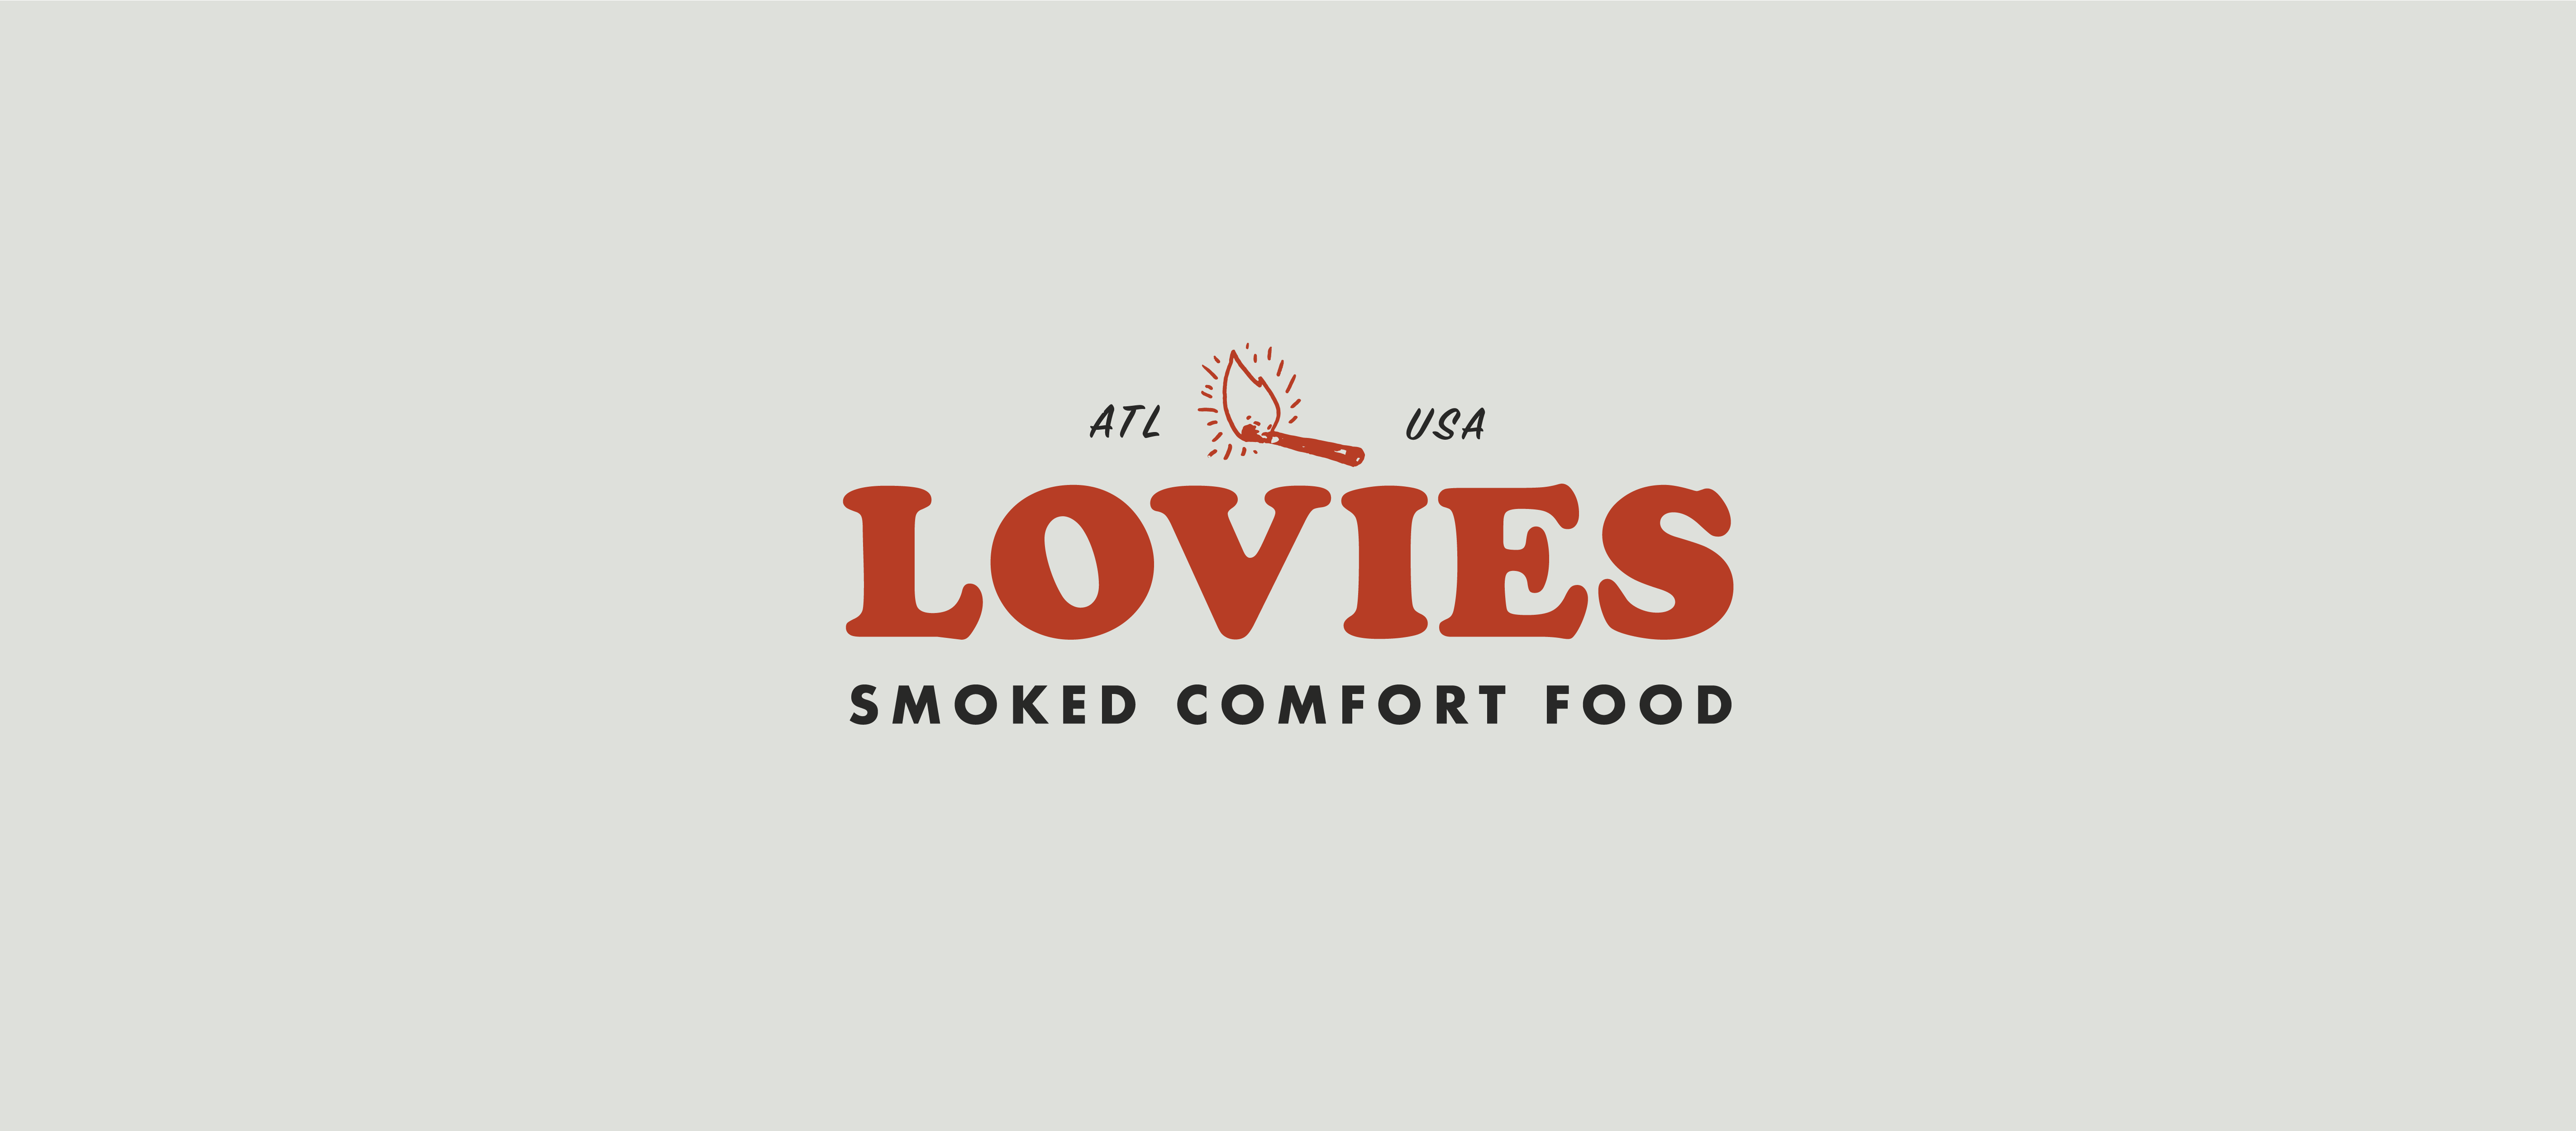 LOVIES SMOKED COMFORT FOOD matchstick logo